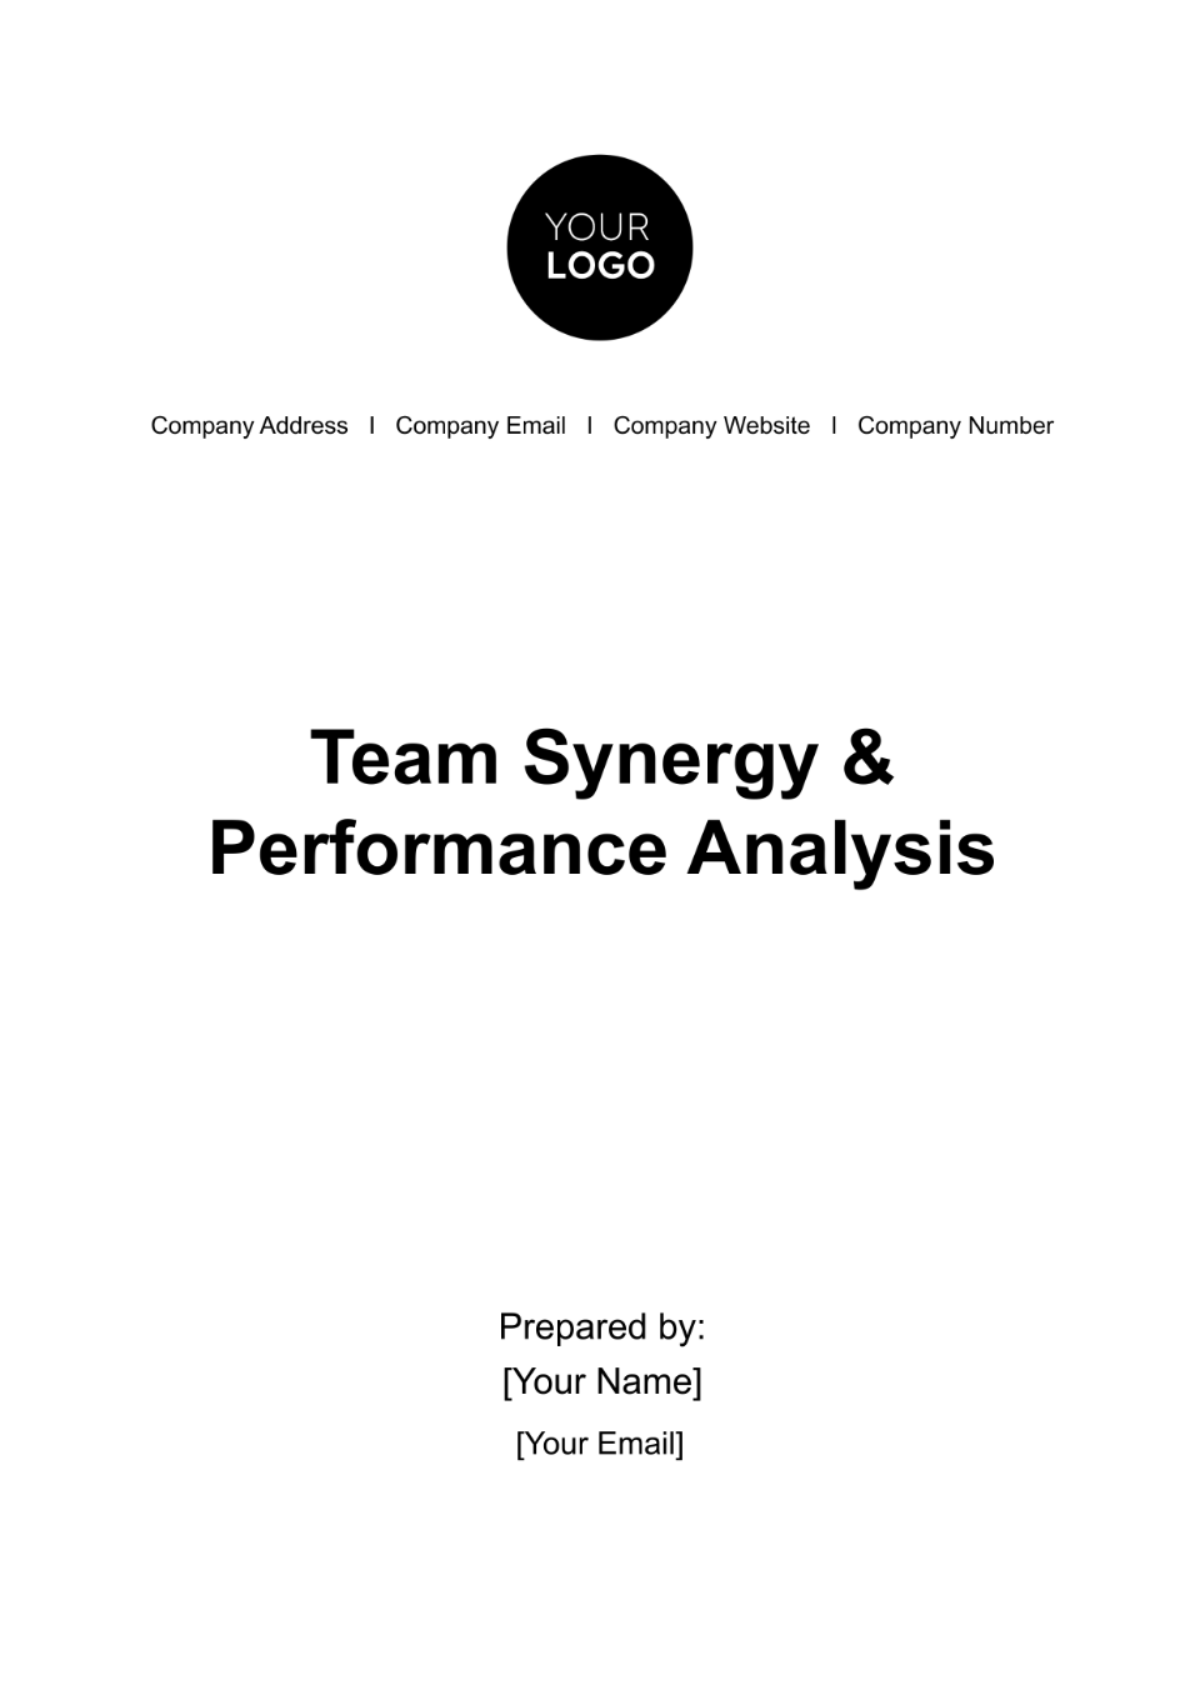 Free Team Synergy & Performance Analysis HR Template